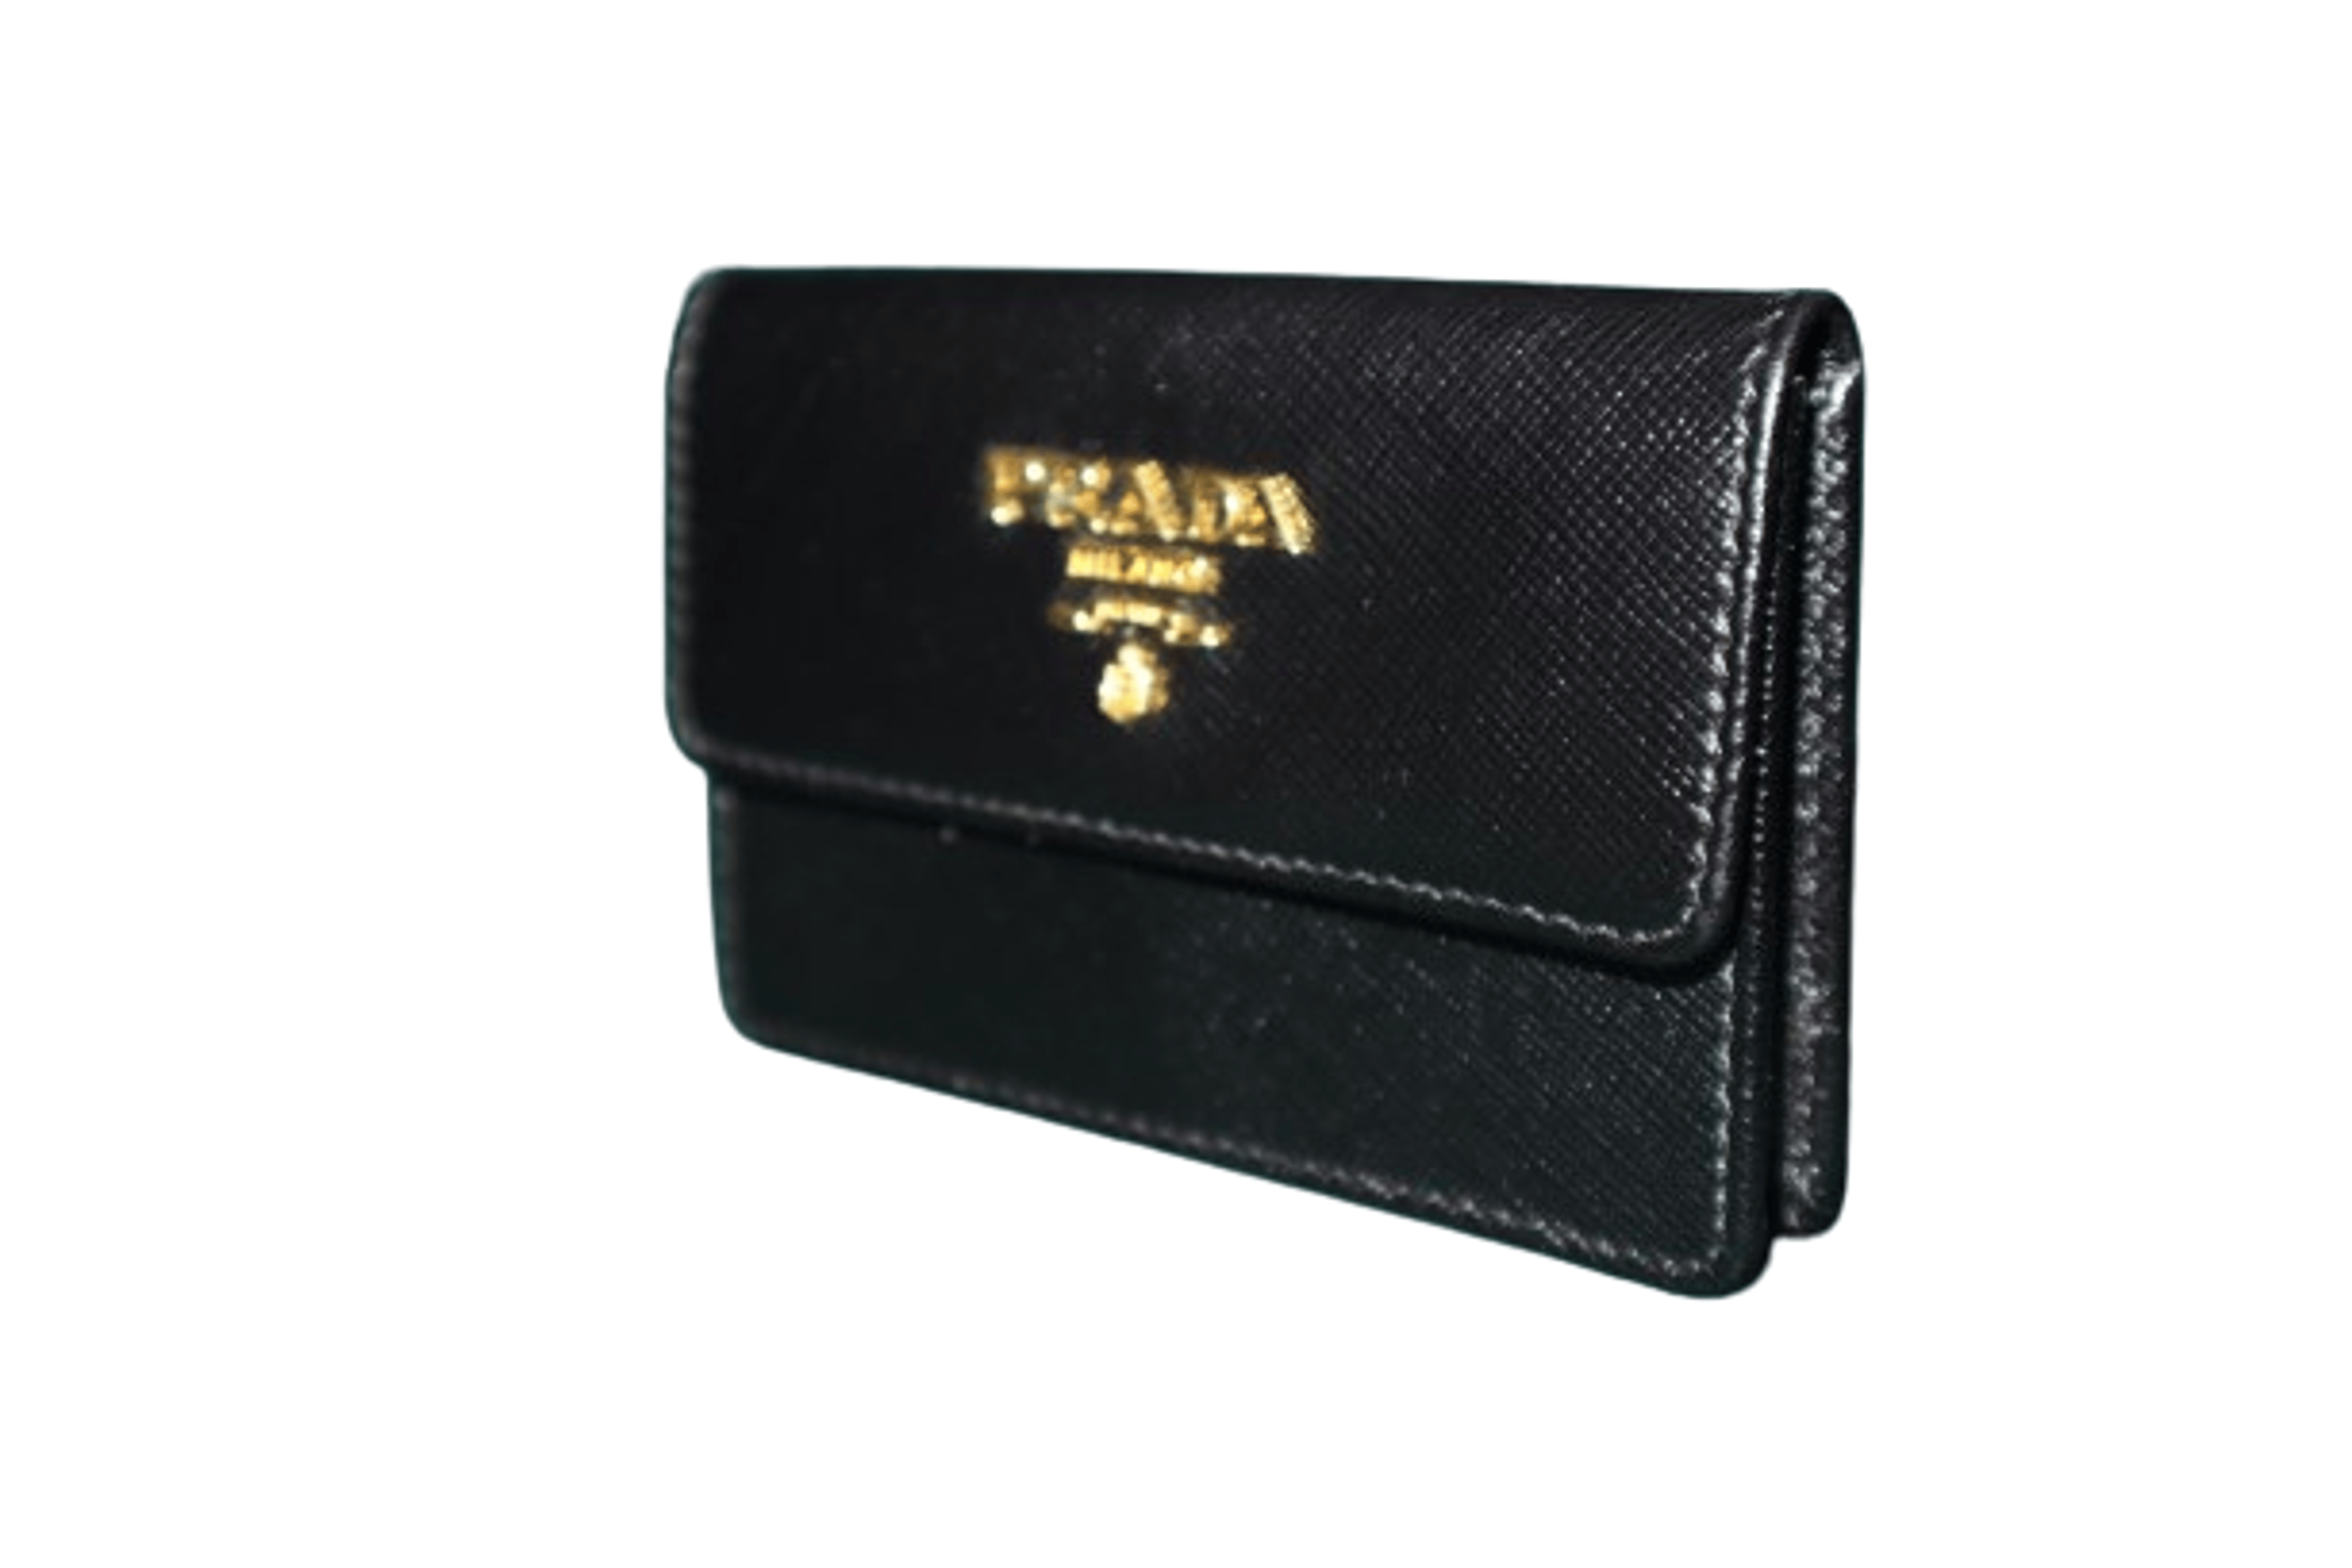 Alternate View 6 of Prada Black Saffiano Leather Flap Card Holder NEW